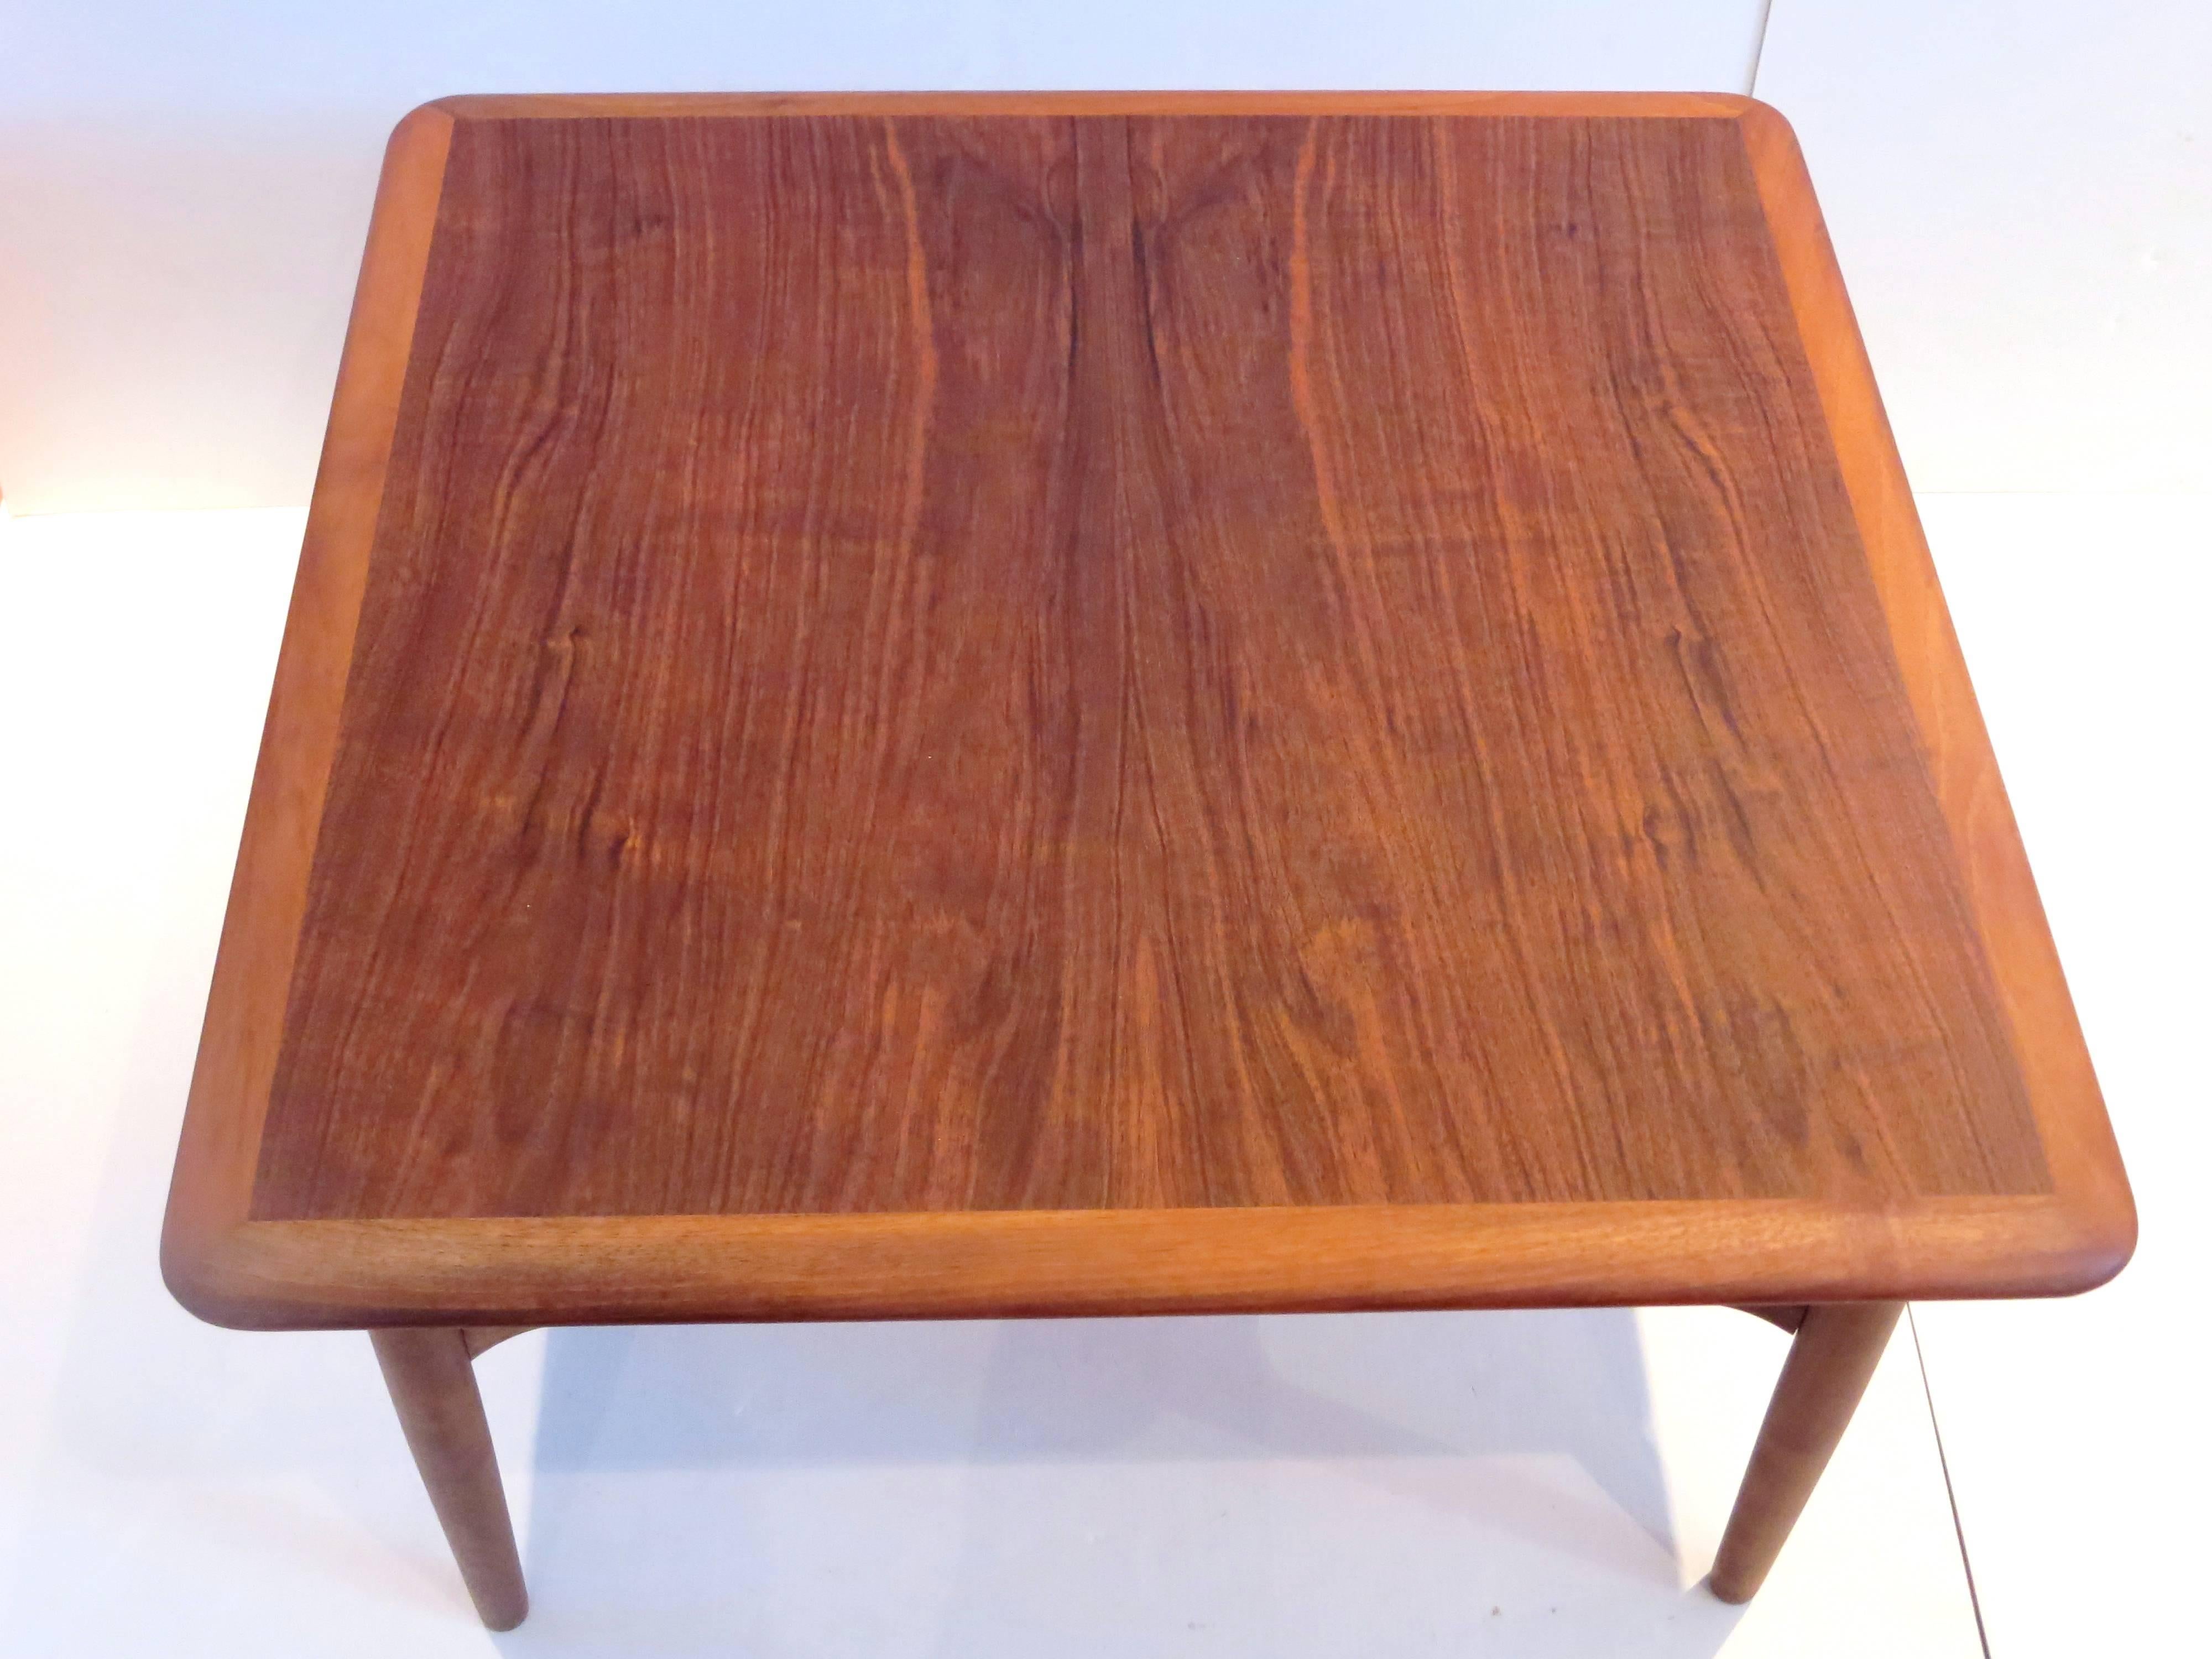 Scandinavian Modern Danish Modern 1950s Square Coffee Table with Caned Shelf by Gunnar Schwartz